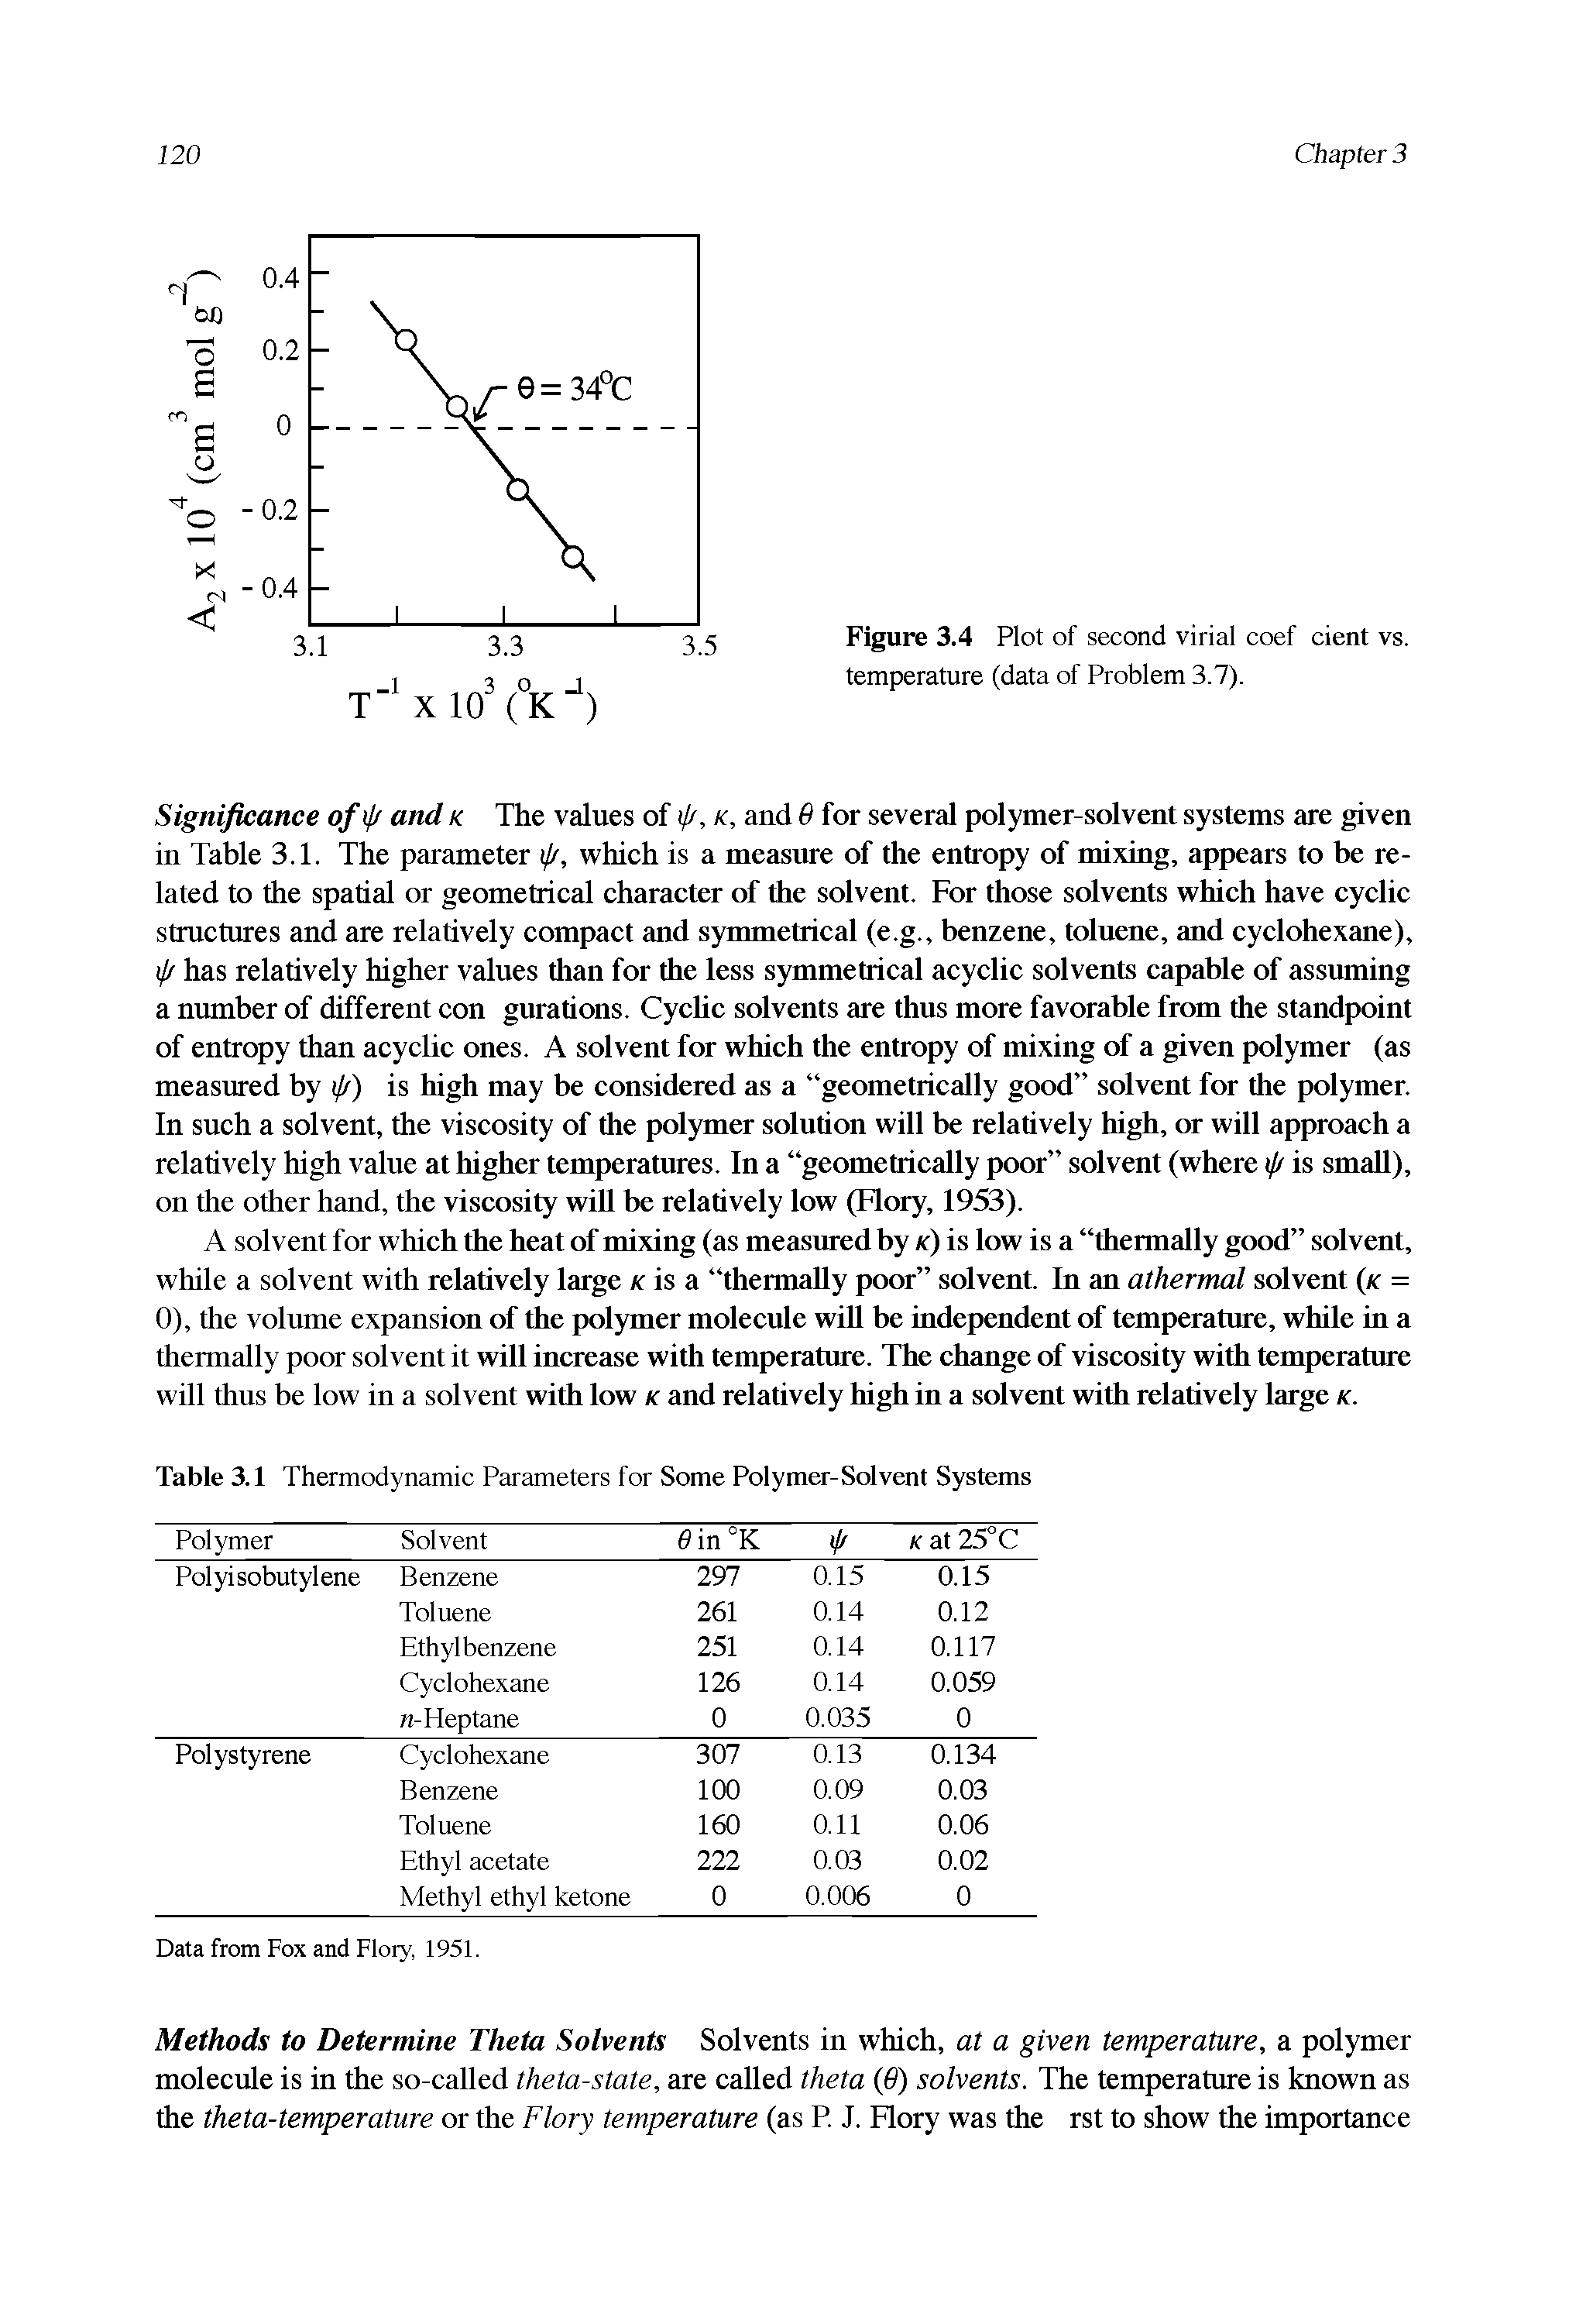 Figure 3.4 Plot of second virial coef cient vs. temperature (data of Problem 3.7).